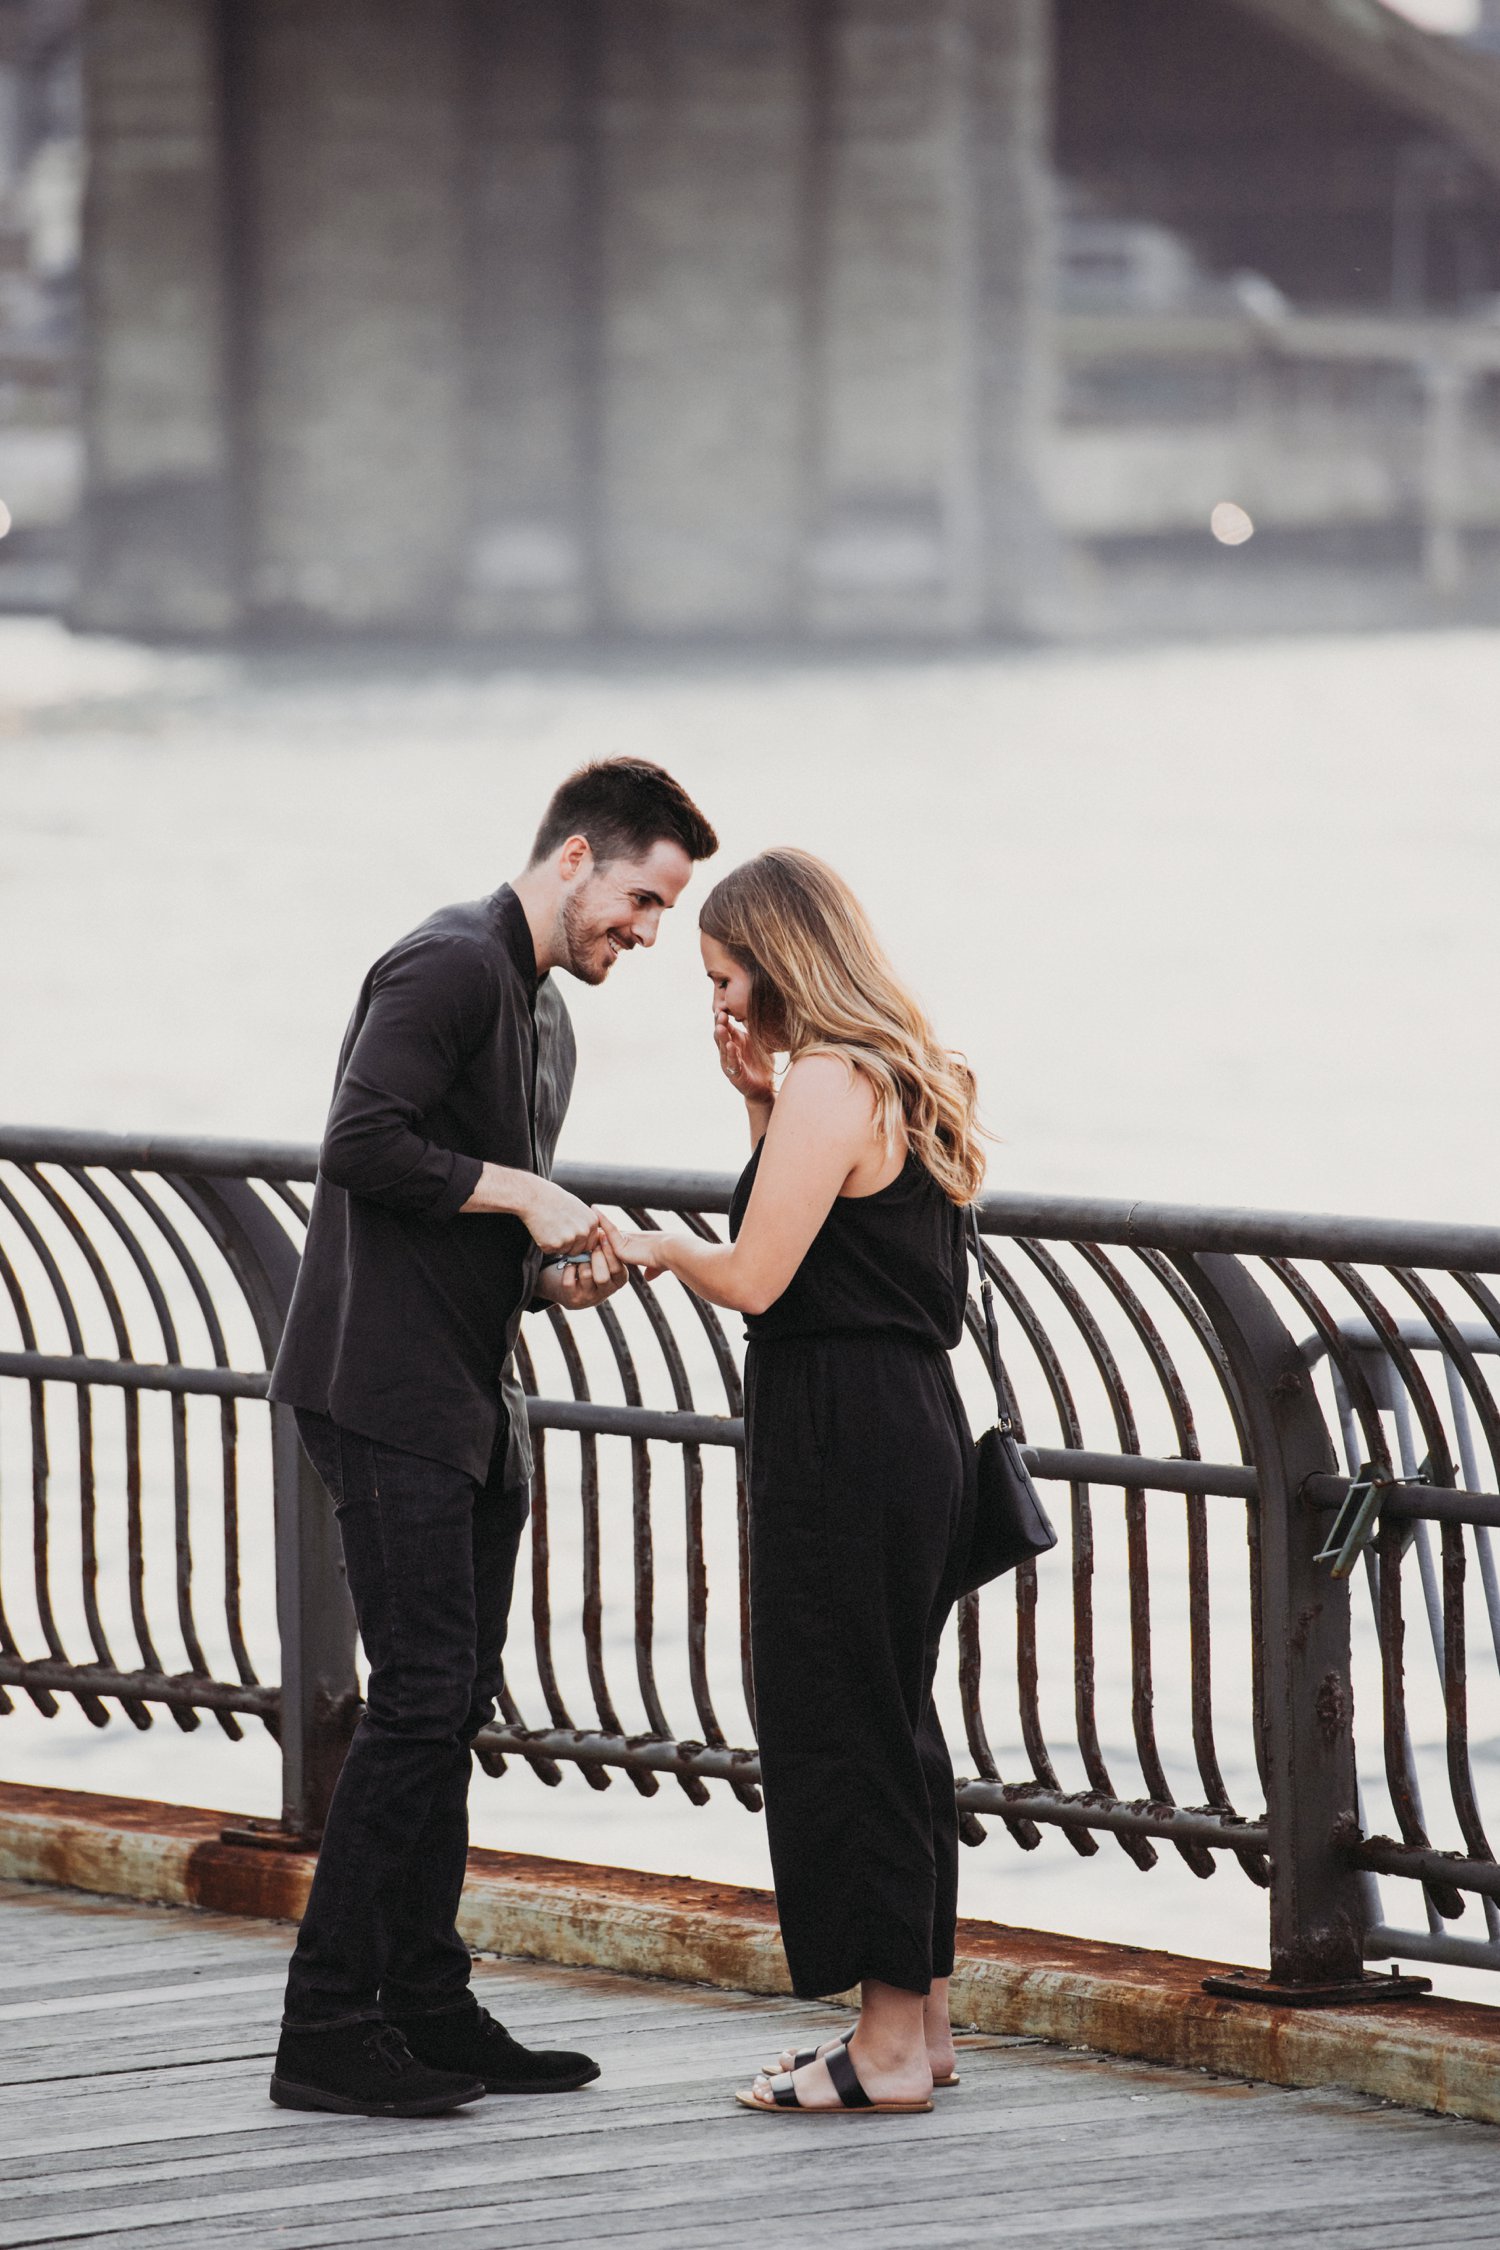  images by feliciathephotographer.com | destination wedding photographer | new york city | brooklyn bridge | proposal | engagement | whimsical | romantic | misty |